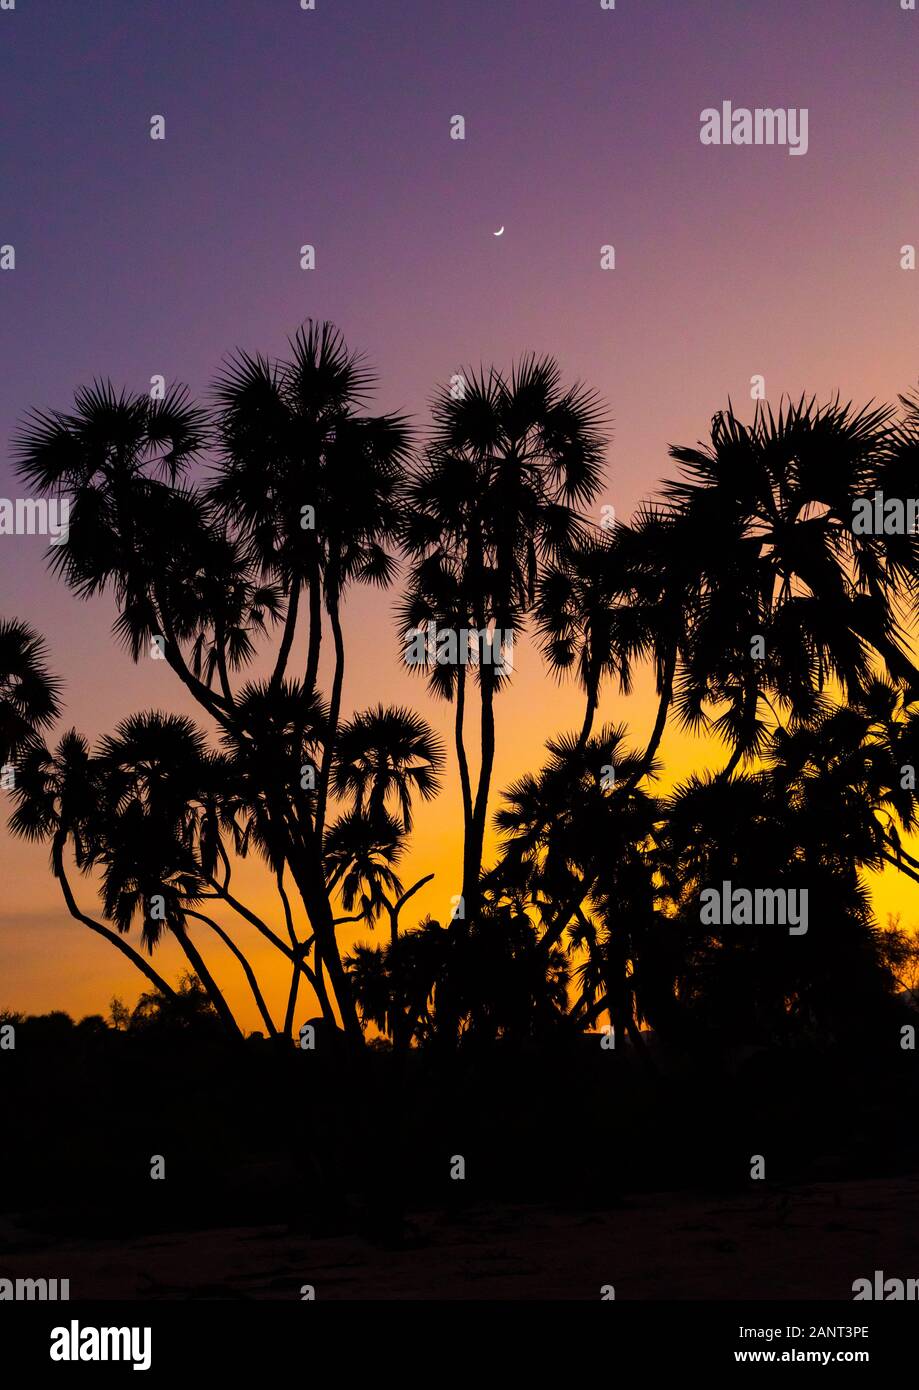 Plam trees in the sunset, Jizan province, Alaydabi, Saudi Arabia Stock Photo